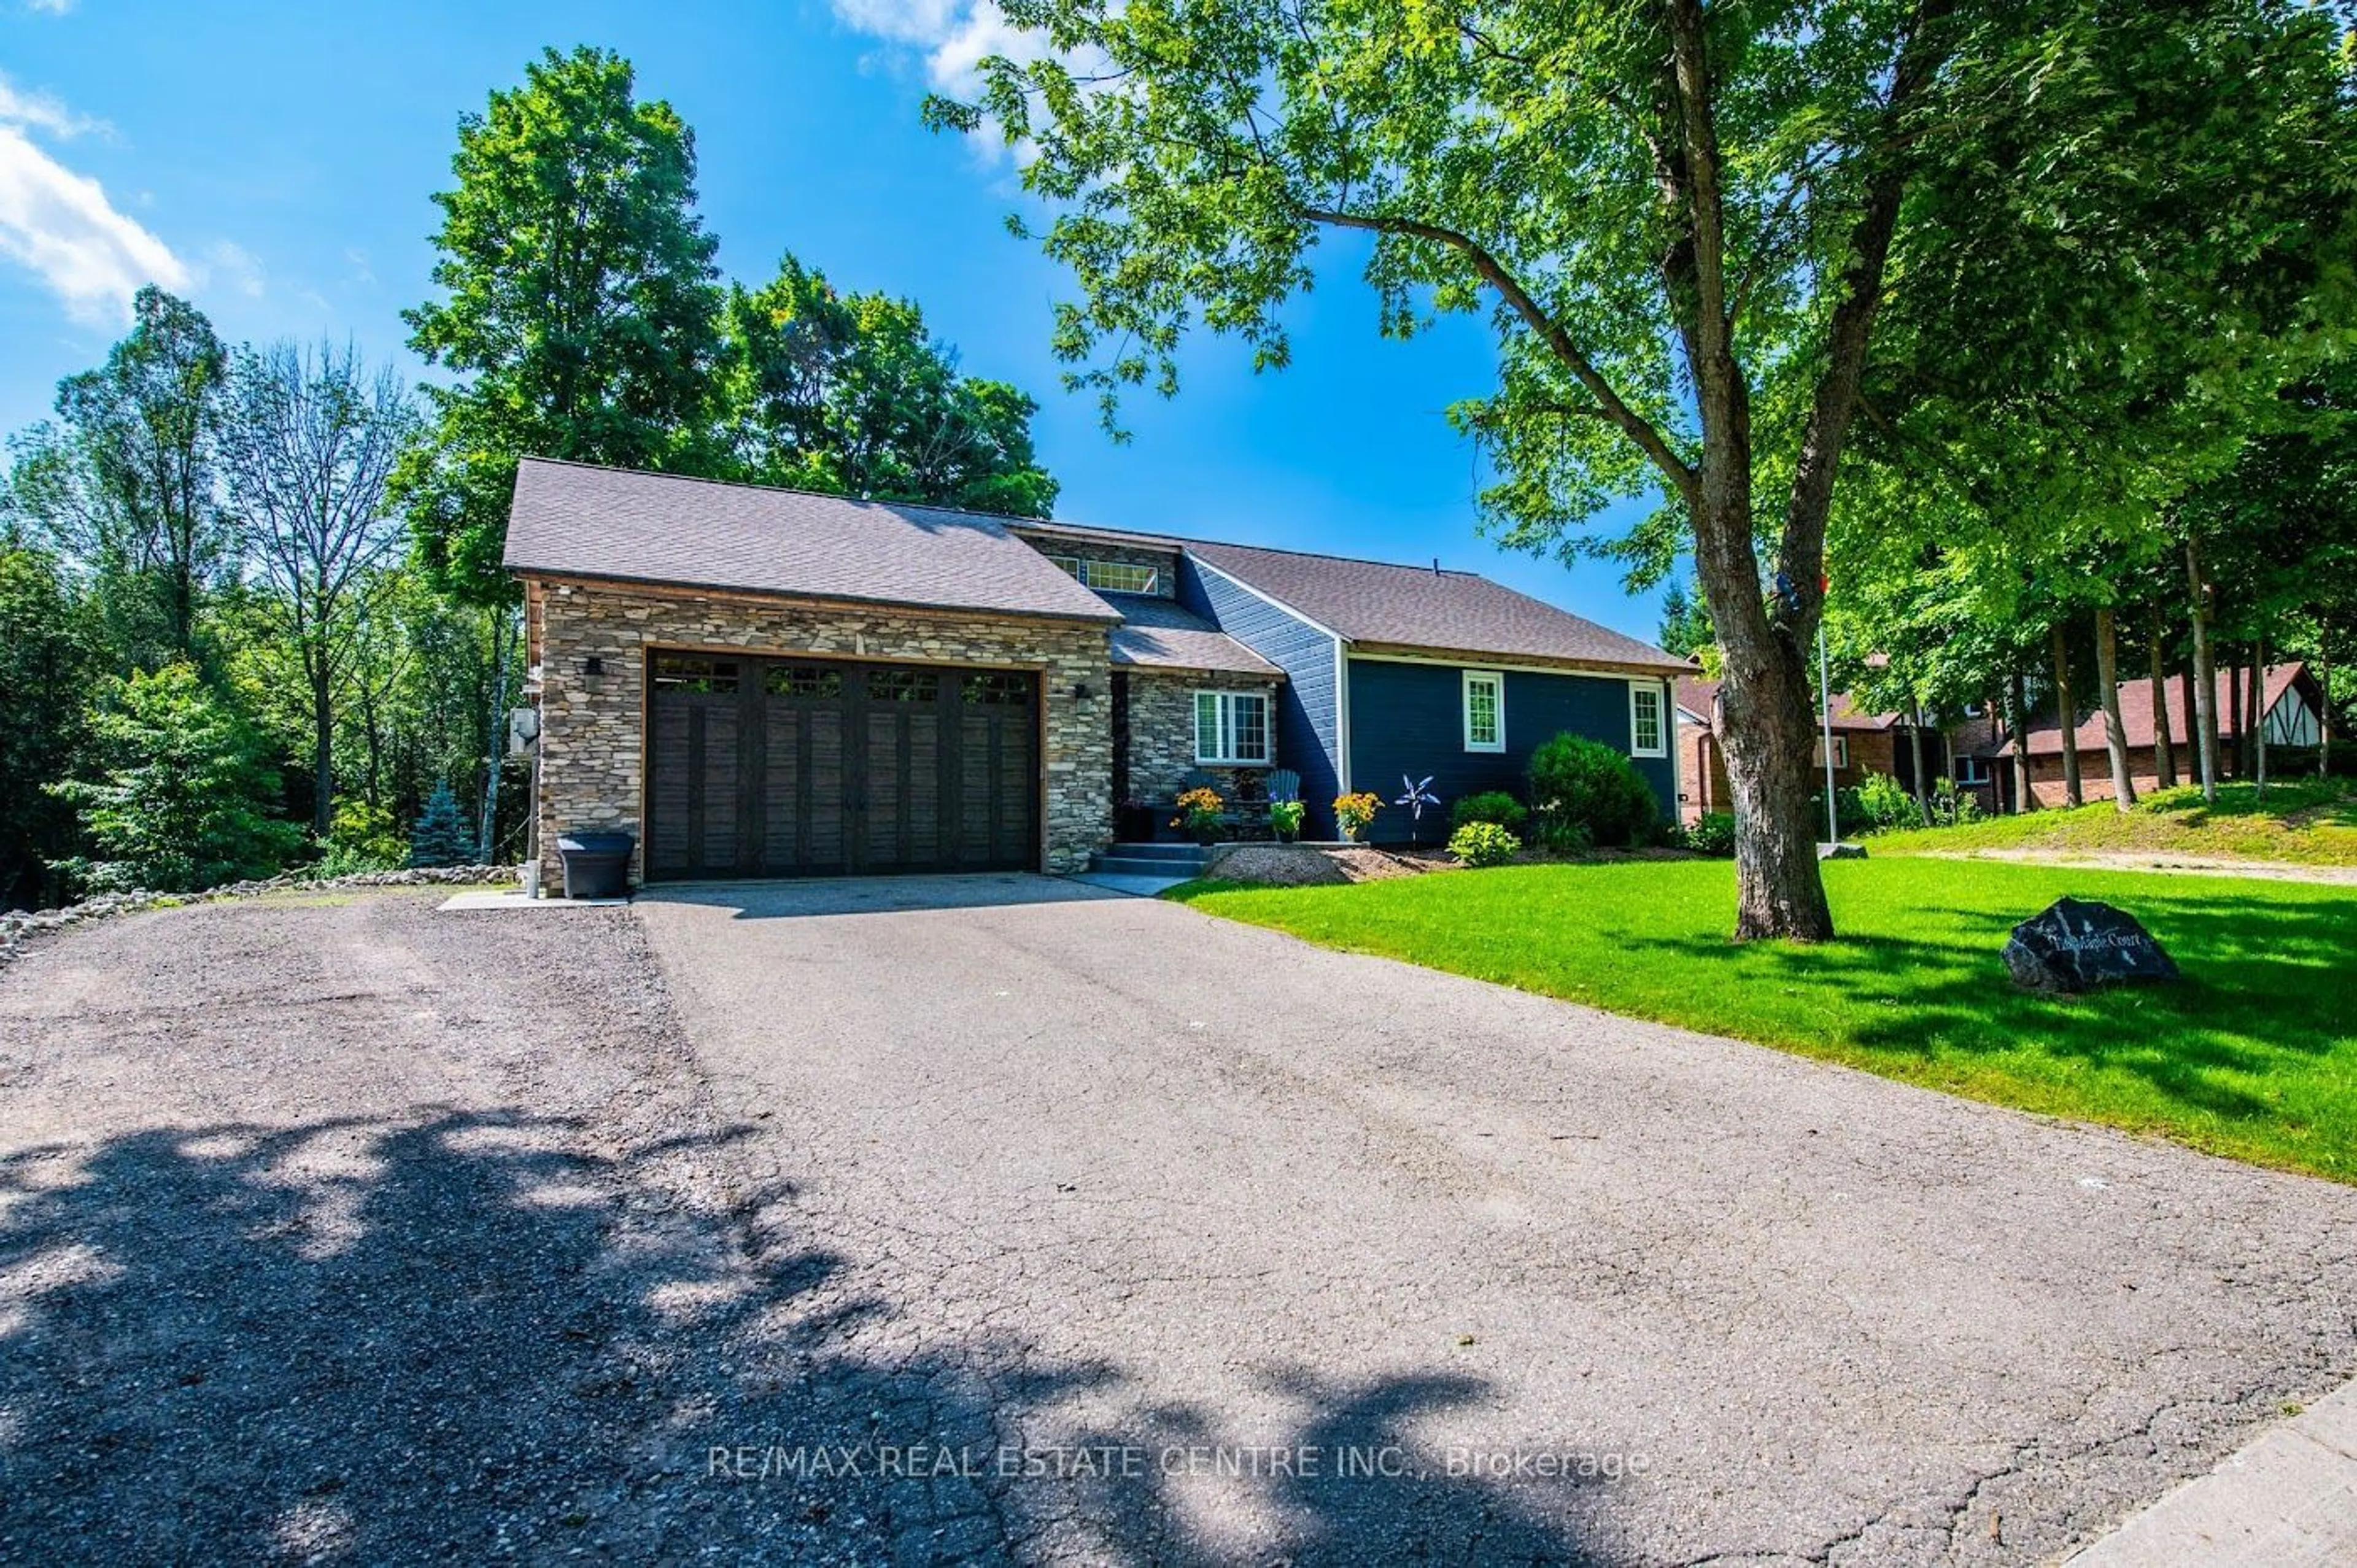 Frontside or backside of a home for 126 Maple Crt, Shelburne Ontario L0N 1S1